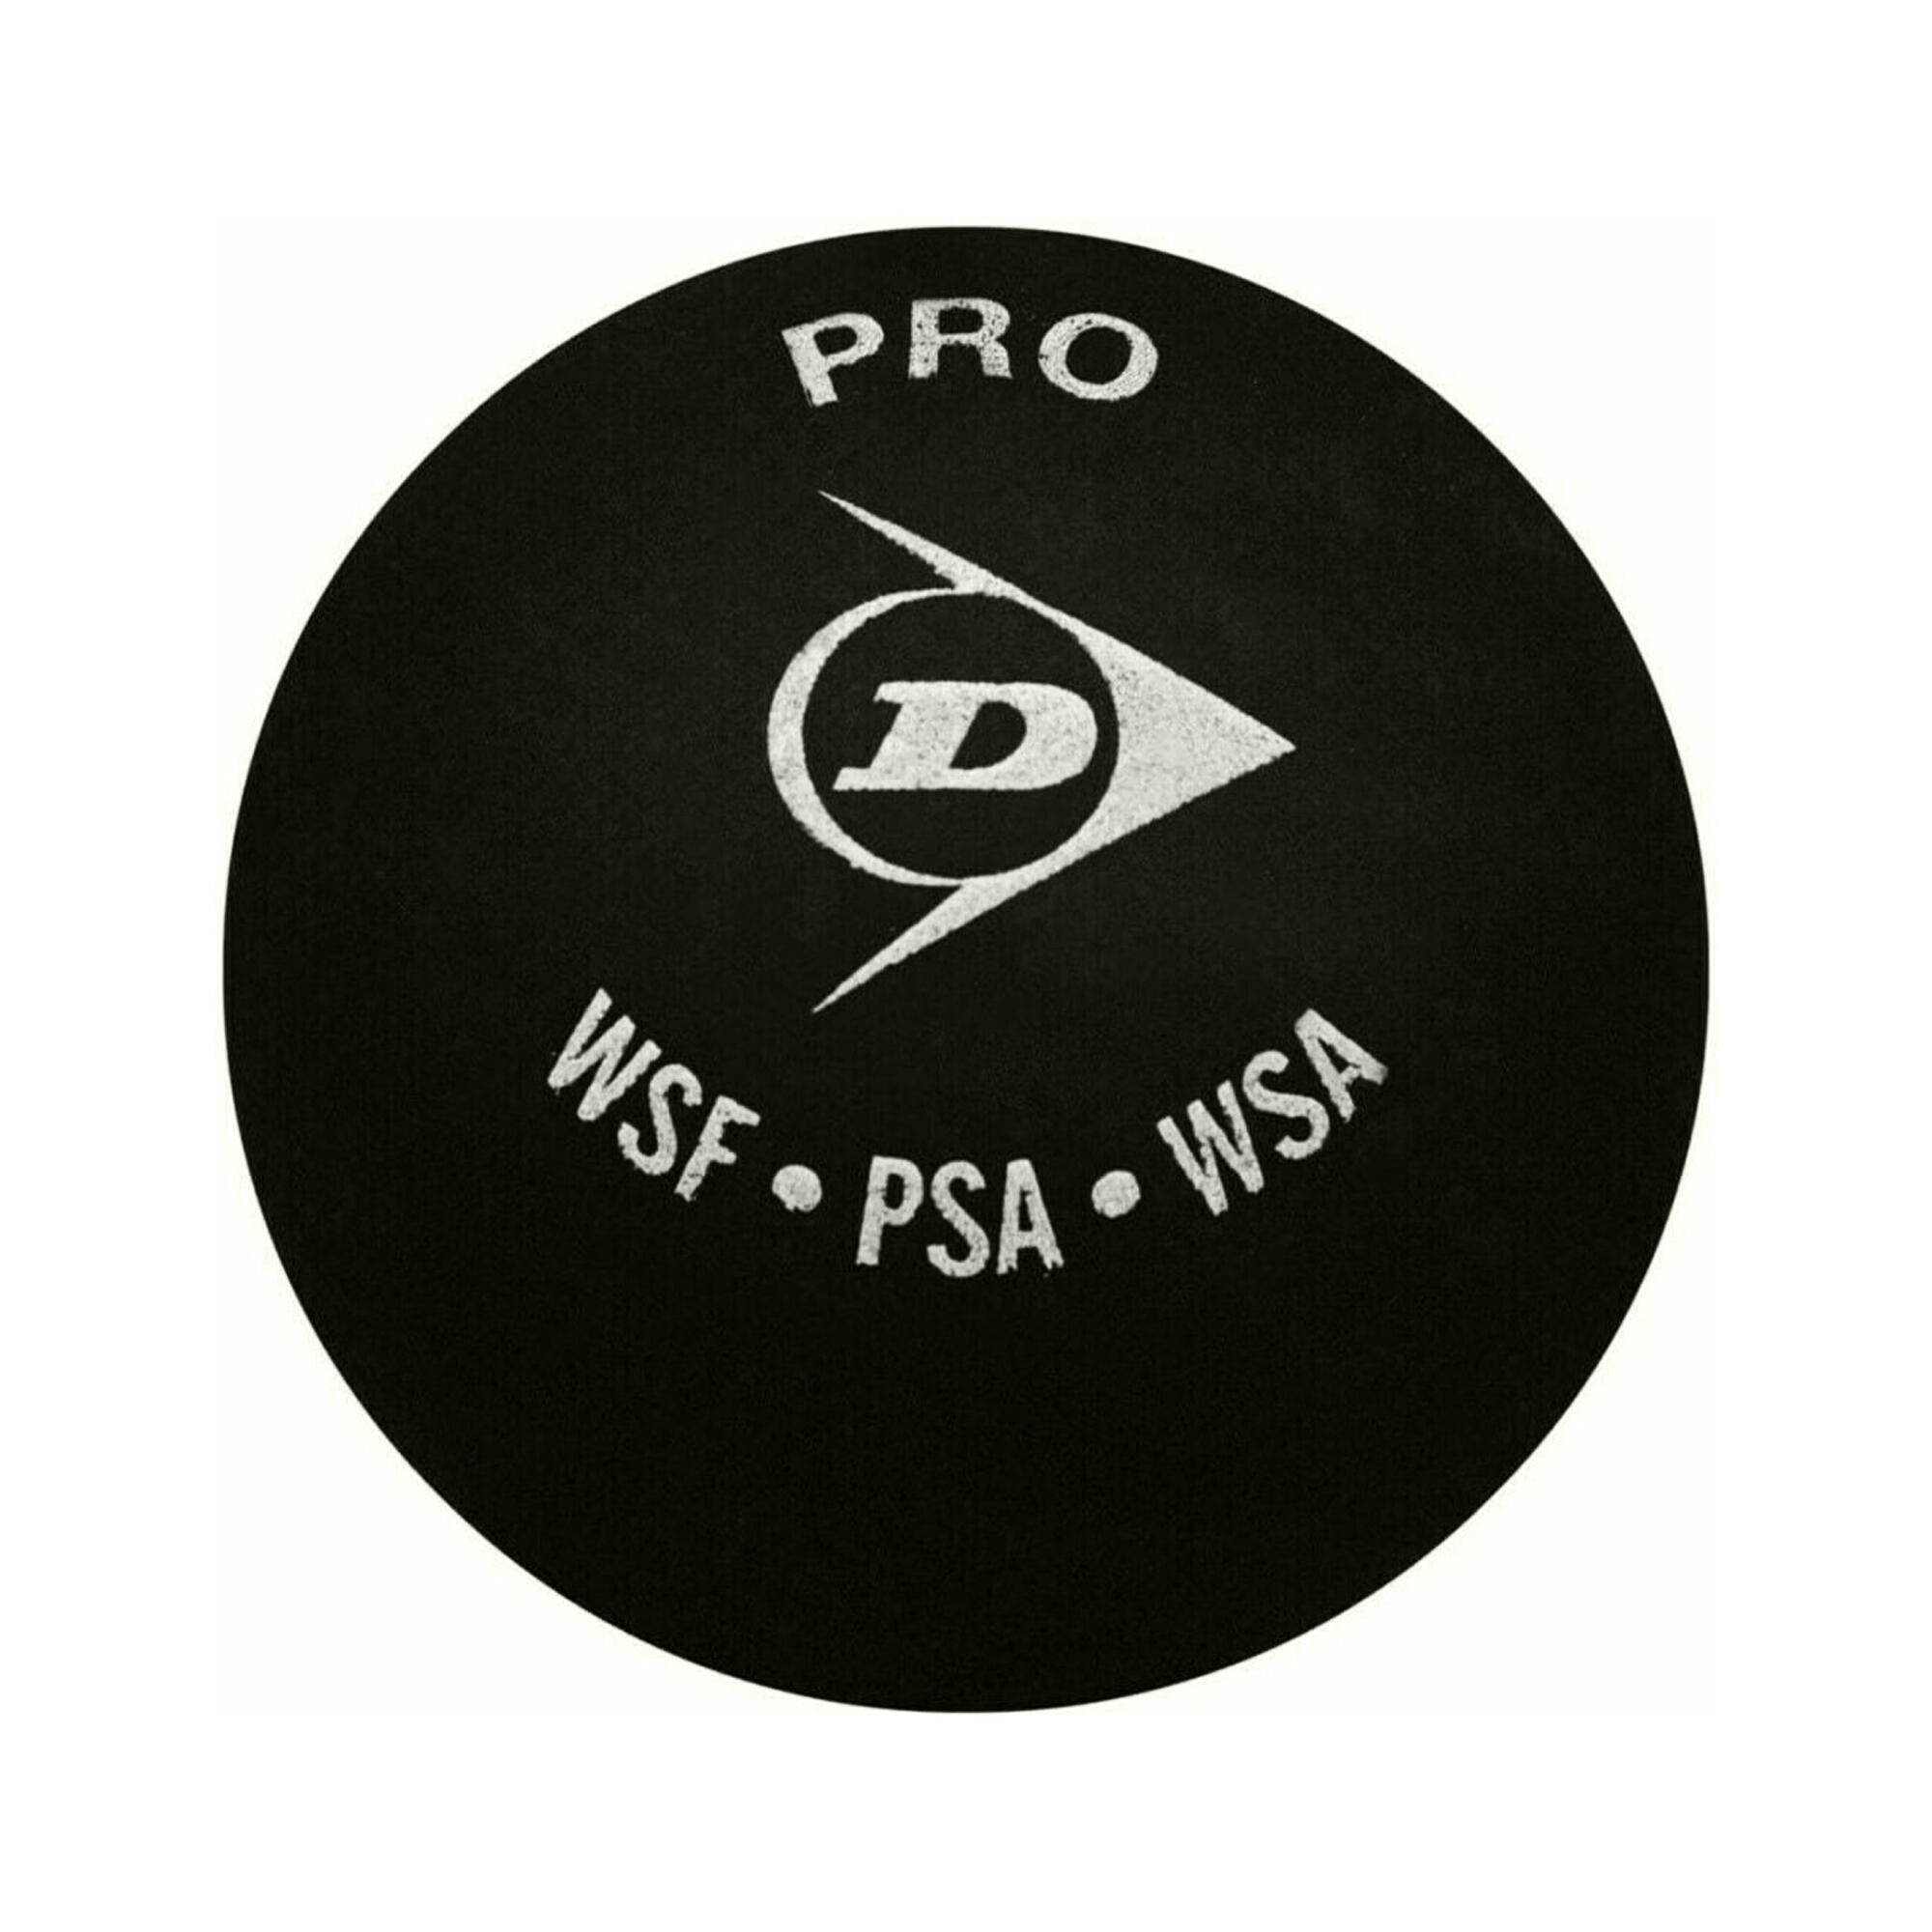 DUNLOP Pro Squash Balls (Pack of 12) (Yellow/Black)